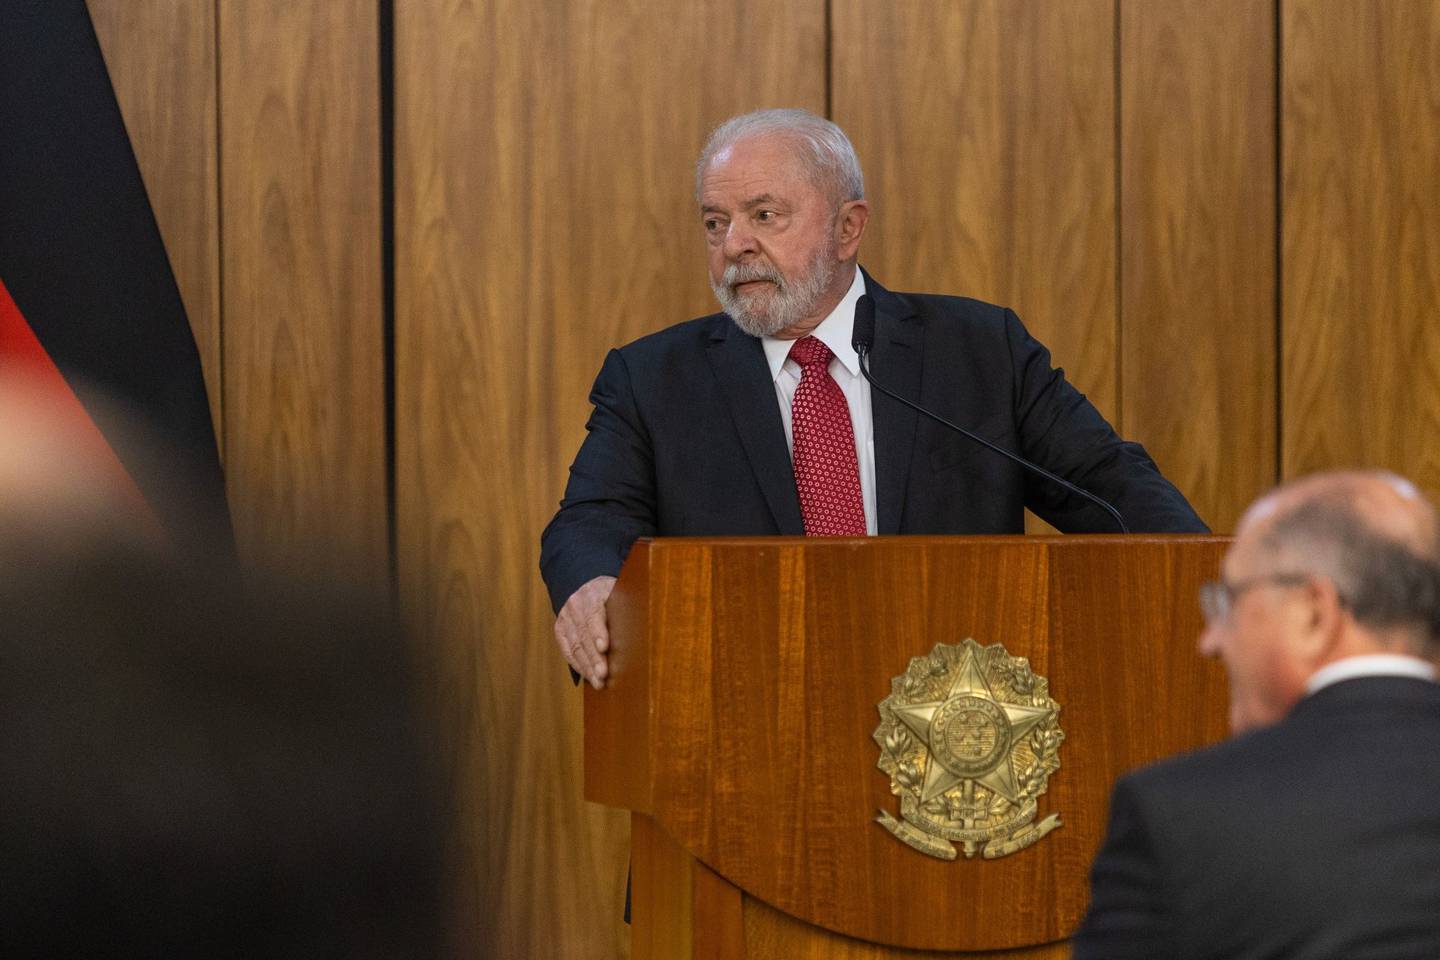 Luiz Inacio Lula da Silva, Brazil's president